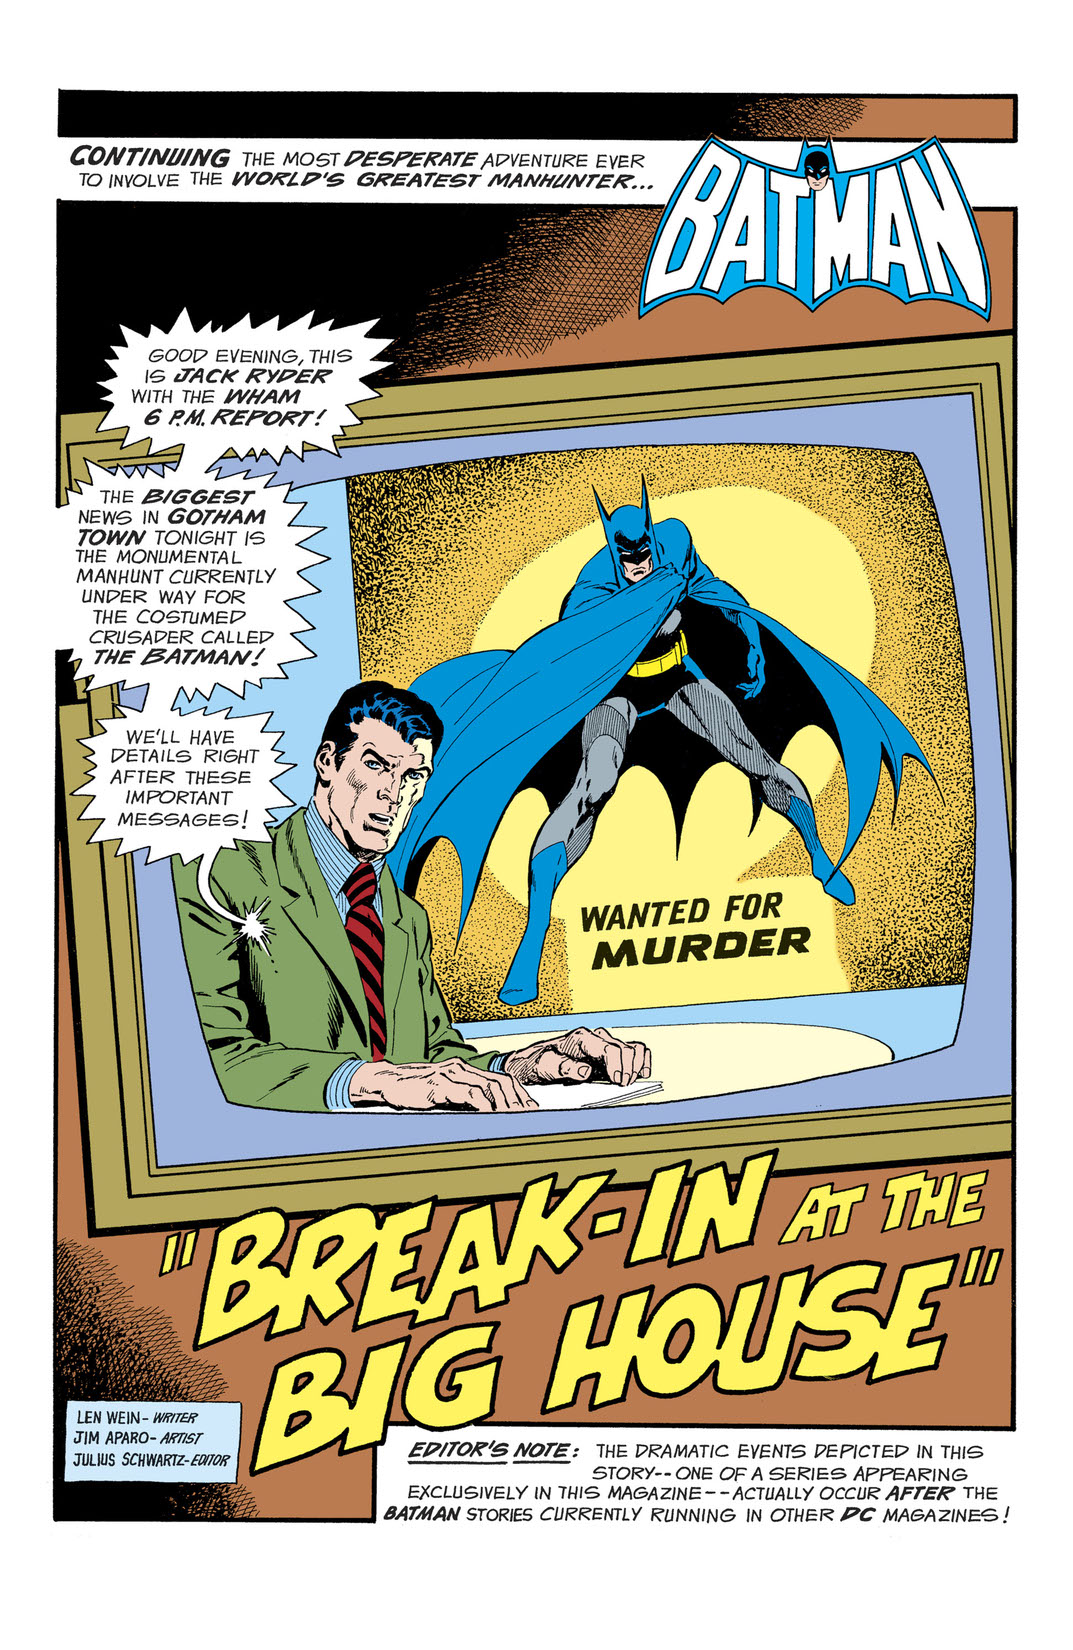 Detective Comics 1937 445 Len Wein John Broome France Herron Jim Aparo Mike Sekowsky Dan Barry